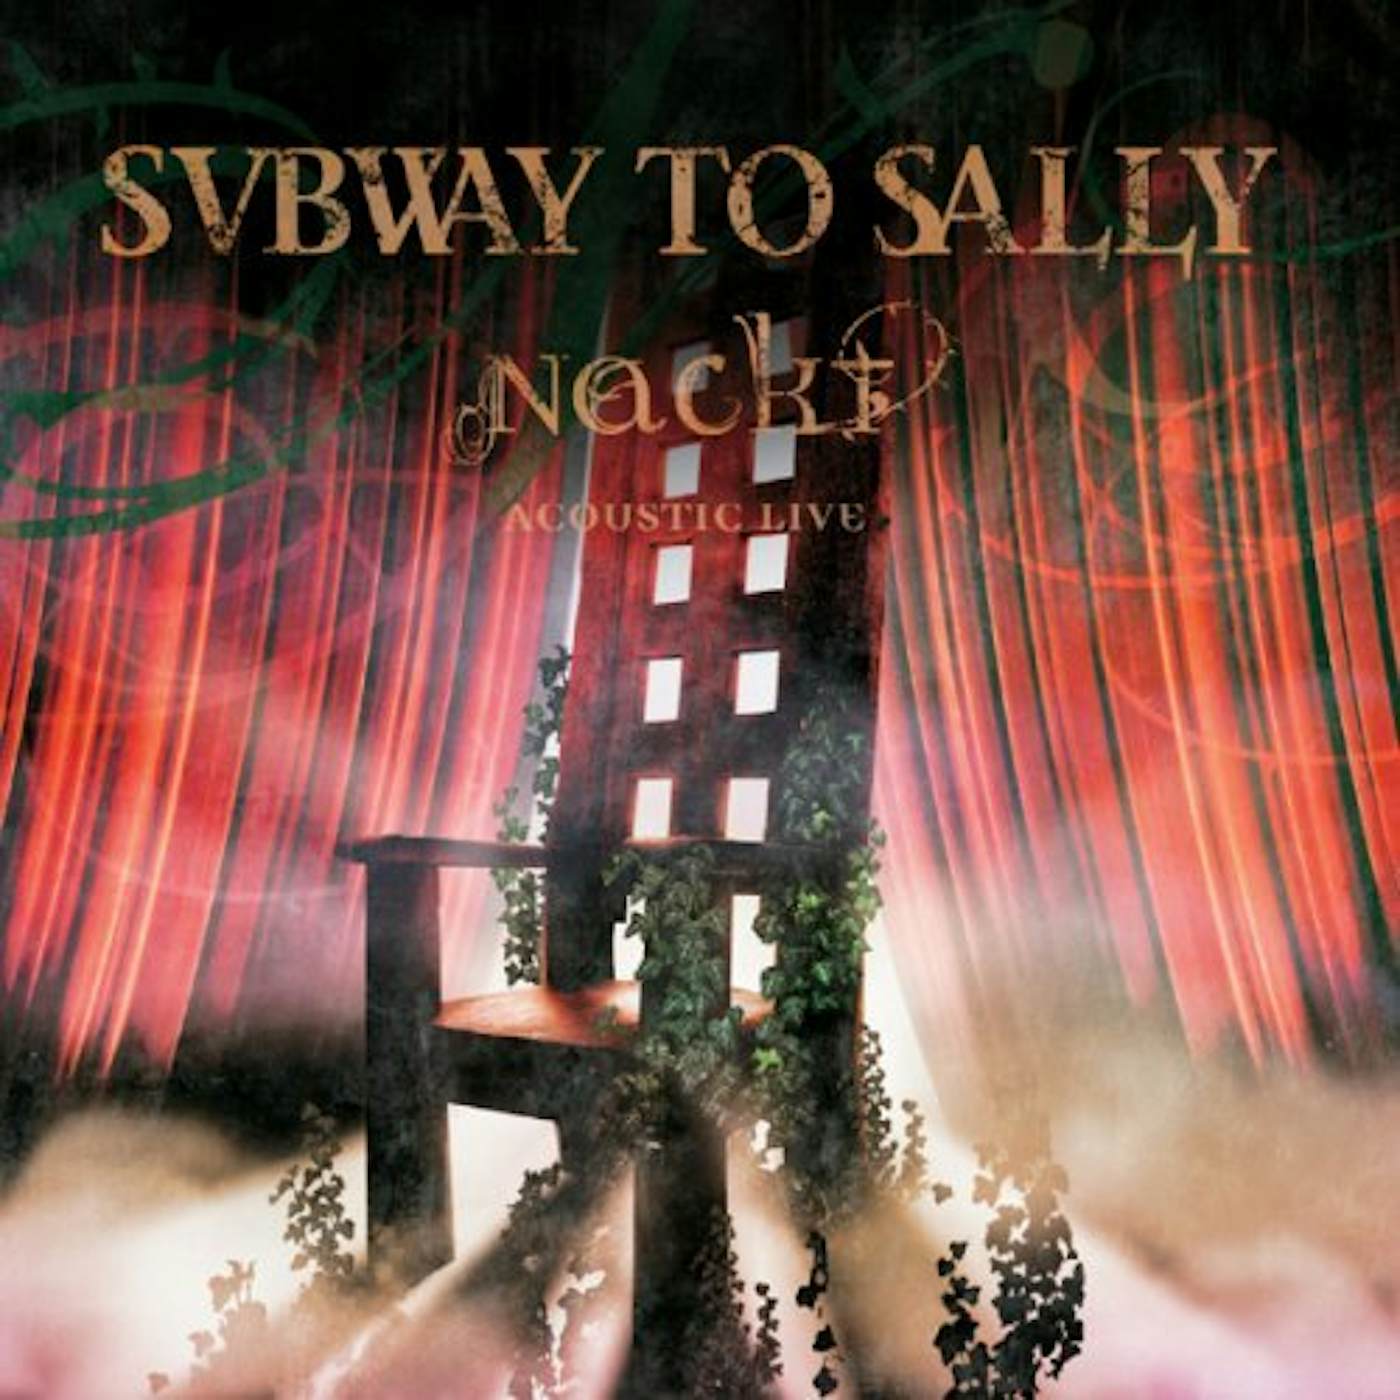 Subway To Sally NACKT CD